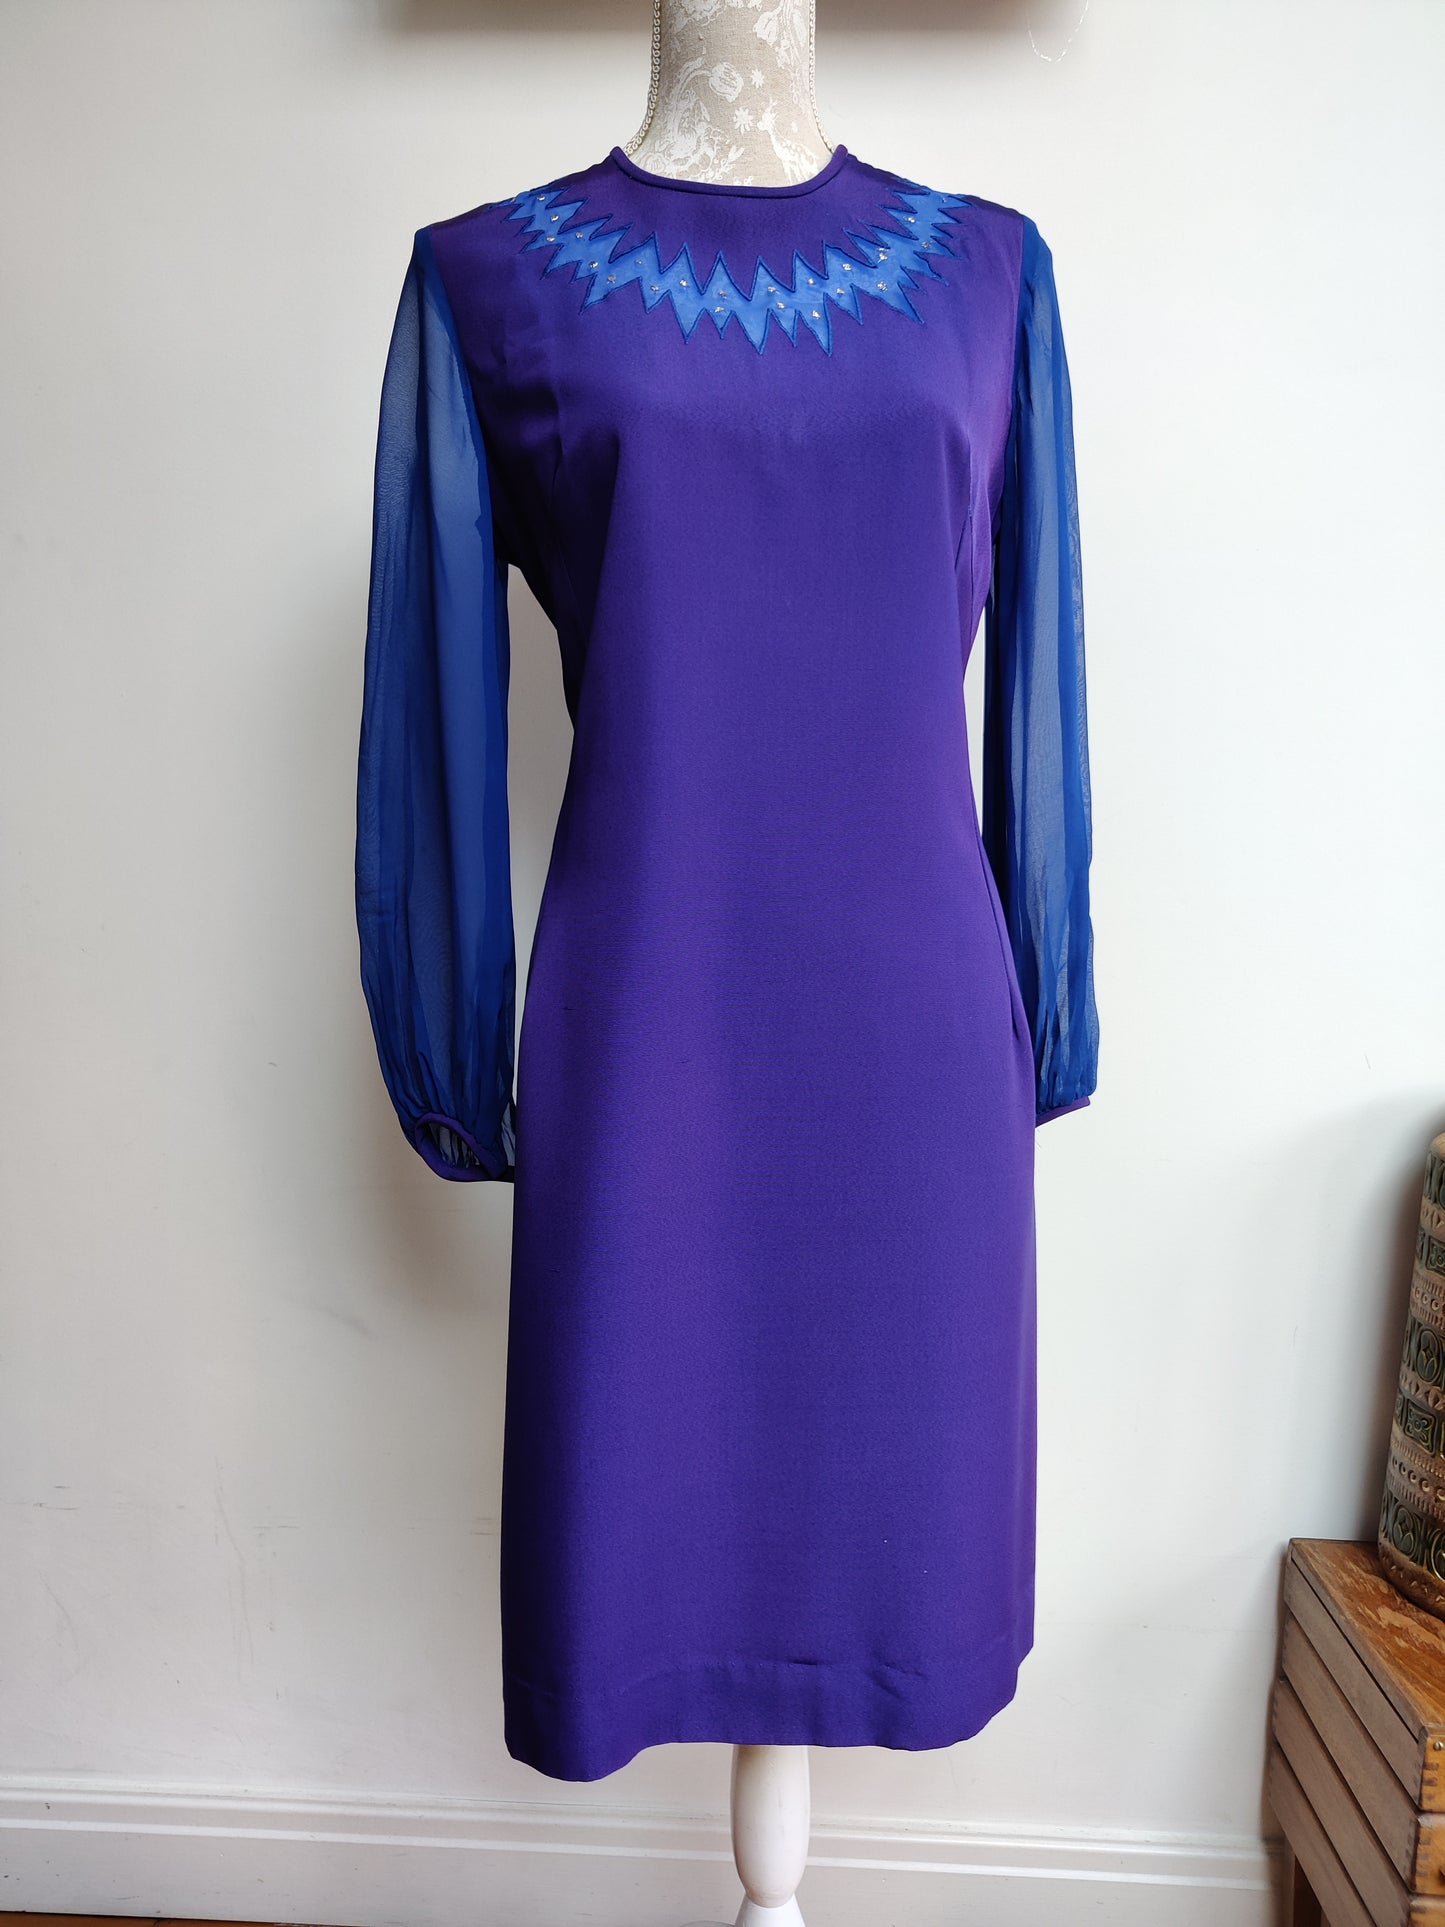 Stunning purple and blue 60s dress with zig zag trim